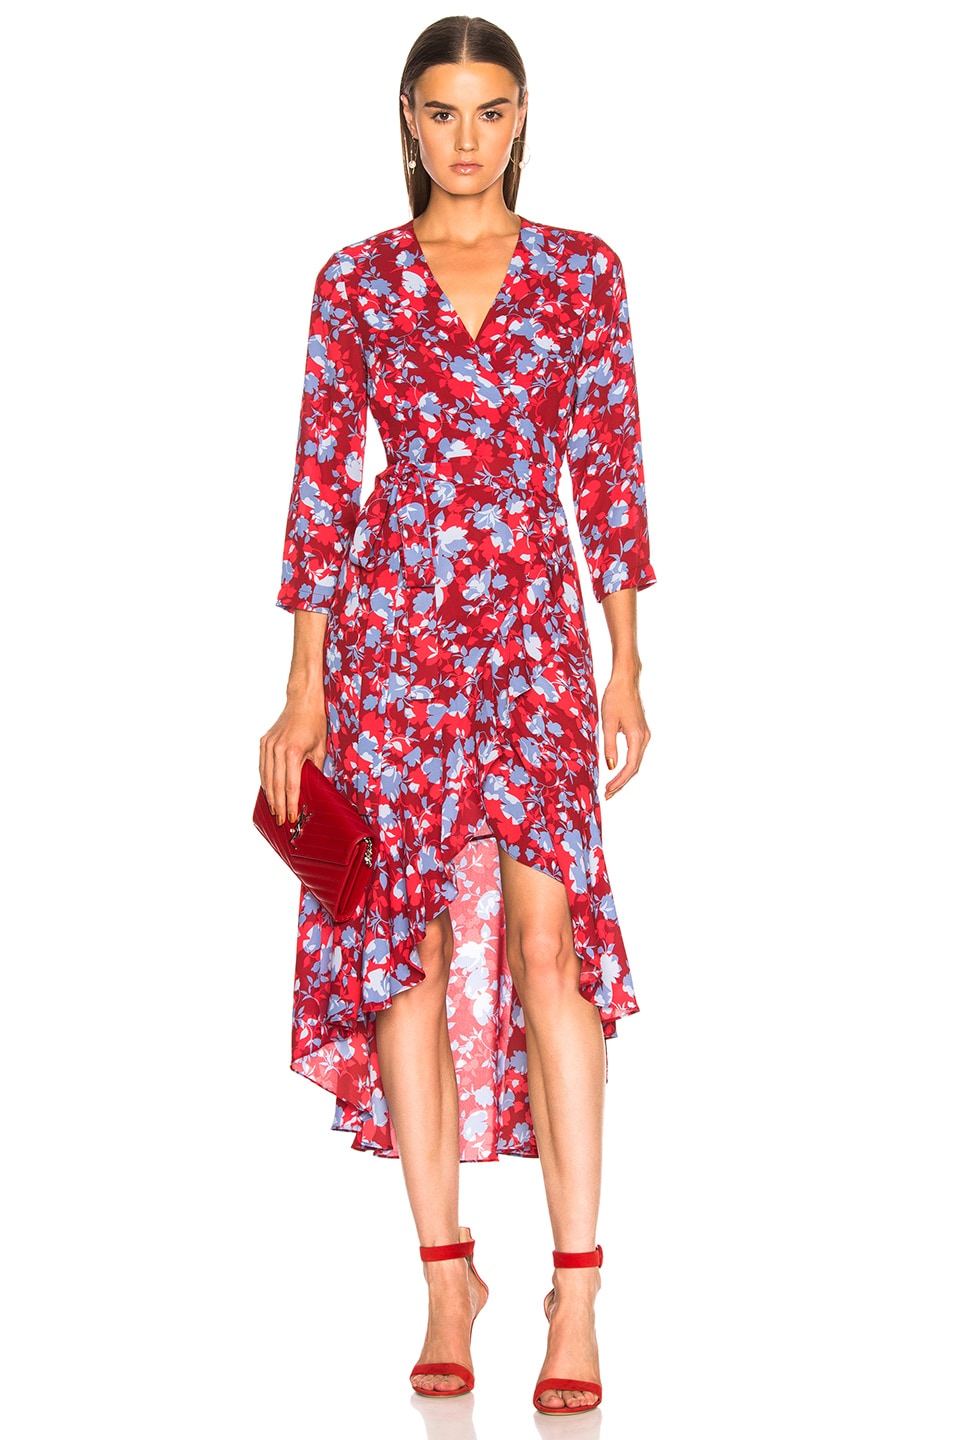 Alexis Lorna Dress in Rouge Floral | FWRD